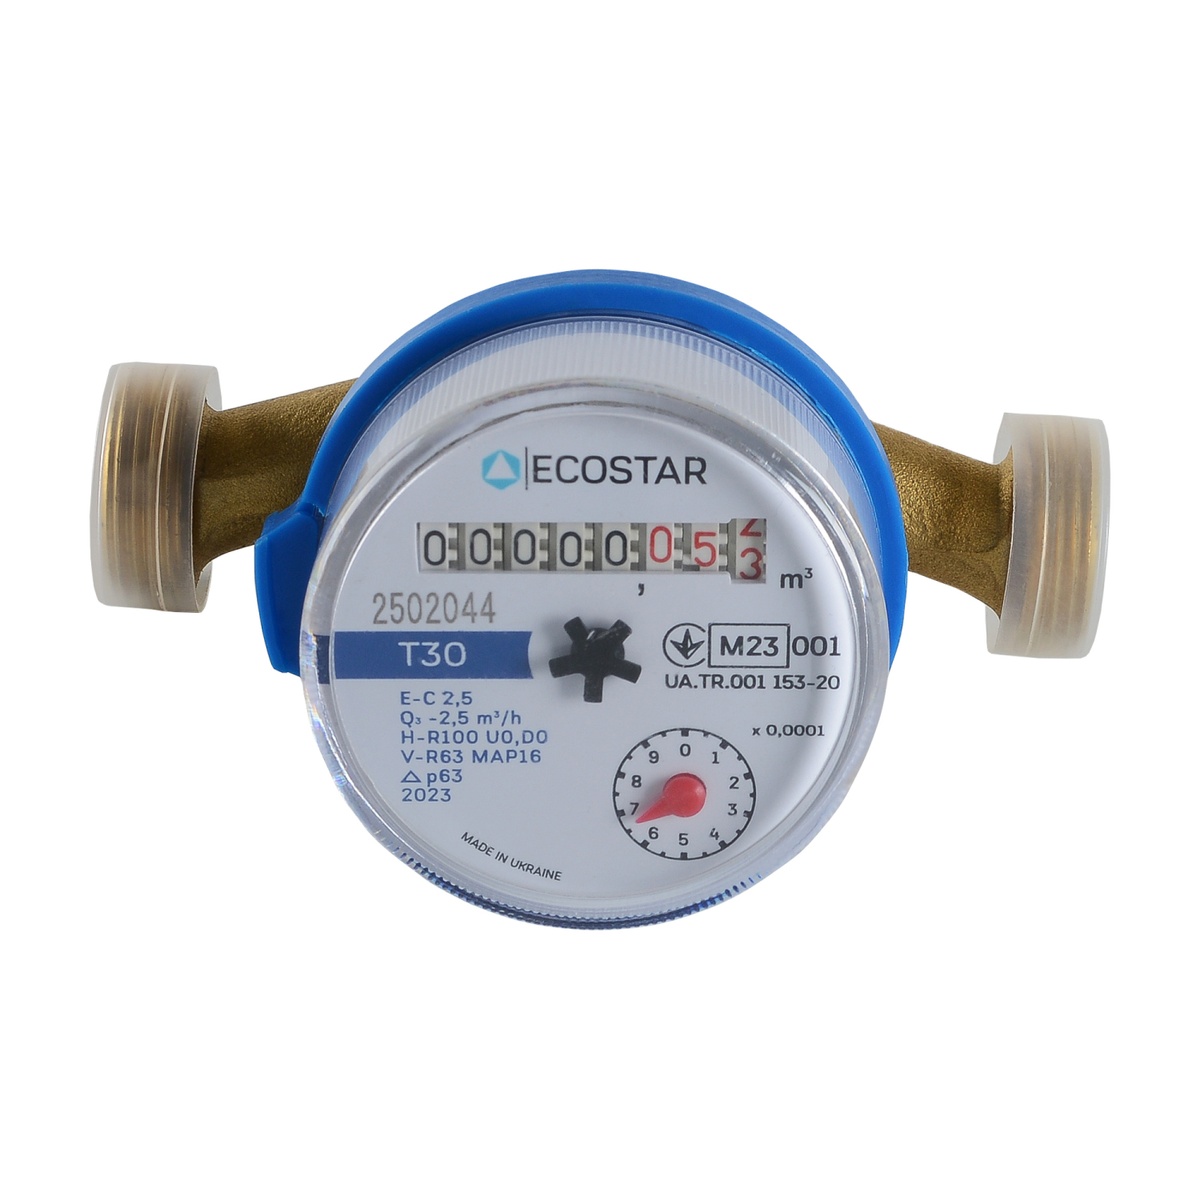 Счётчик для холодной воды ECOSTAR E-C 2.5 DN15 1/2" 000023020